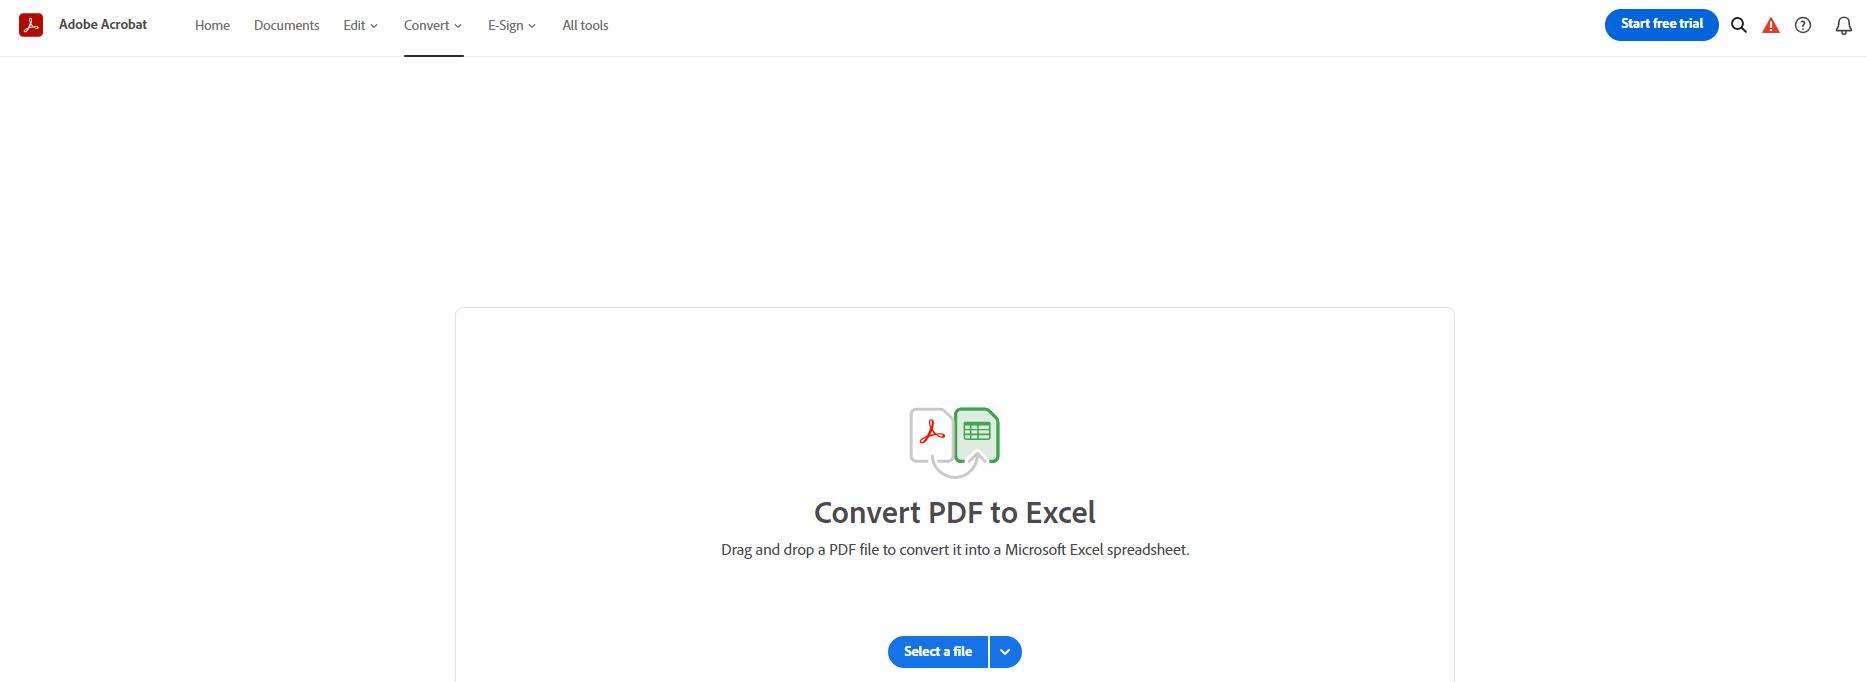 Convert PDF to Excel with Adobe Acrobat Online Converter